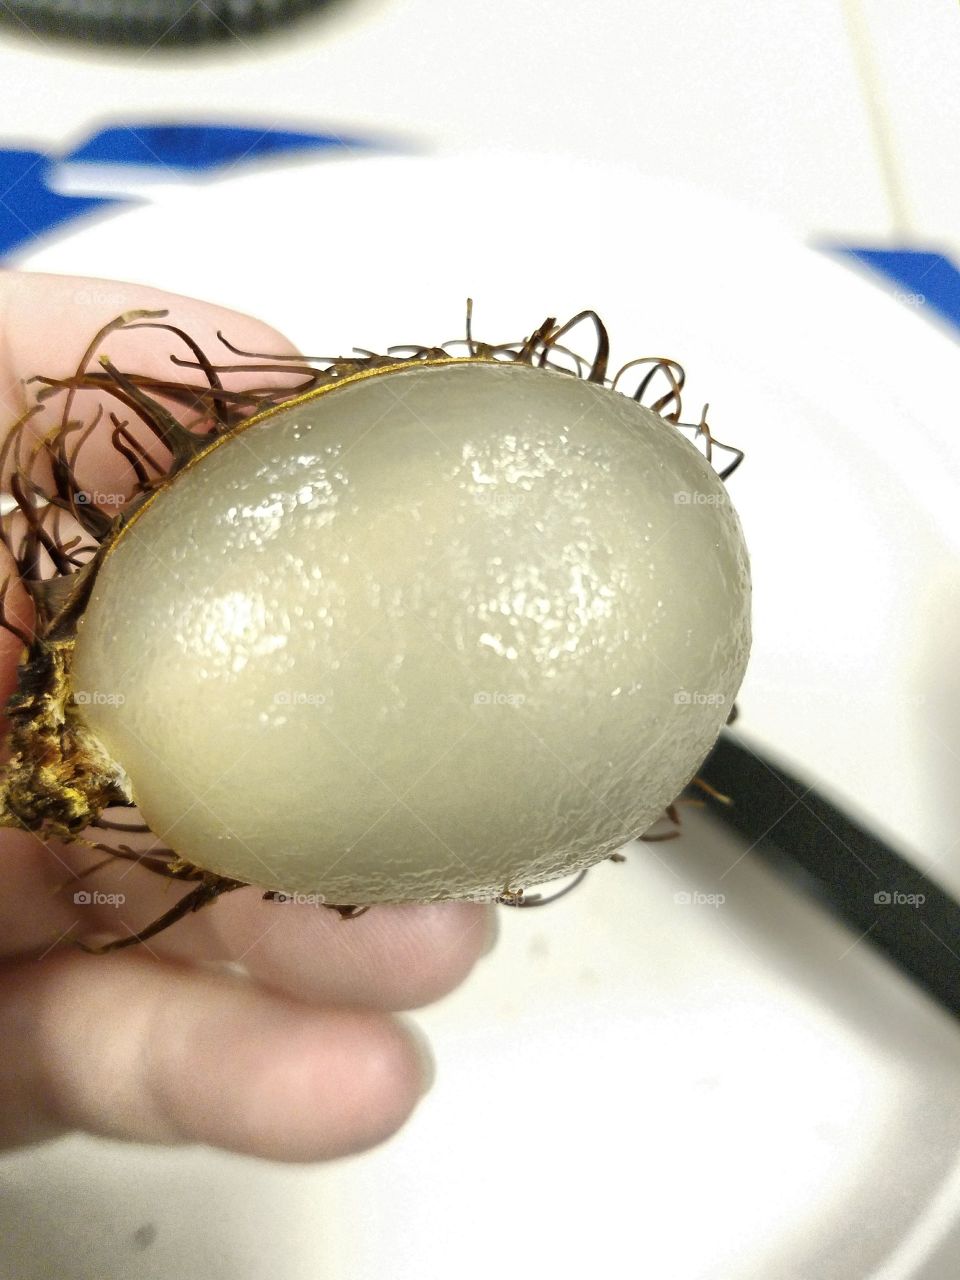 rambutan - the inside fleshy part